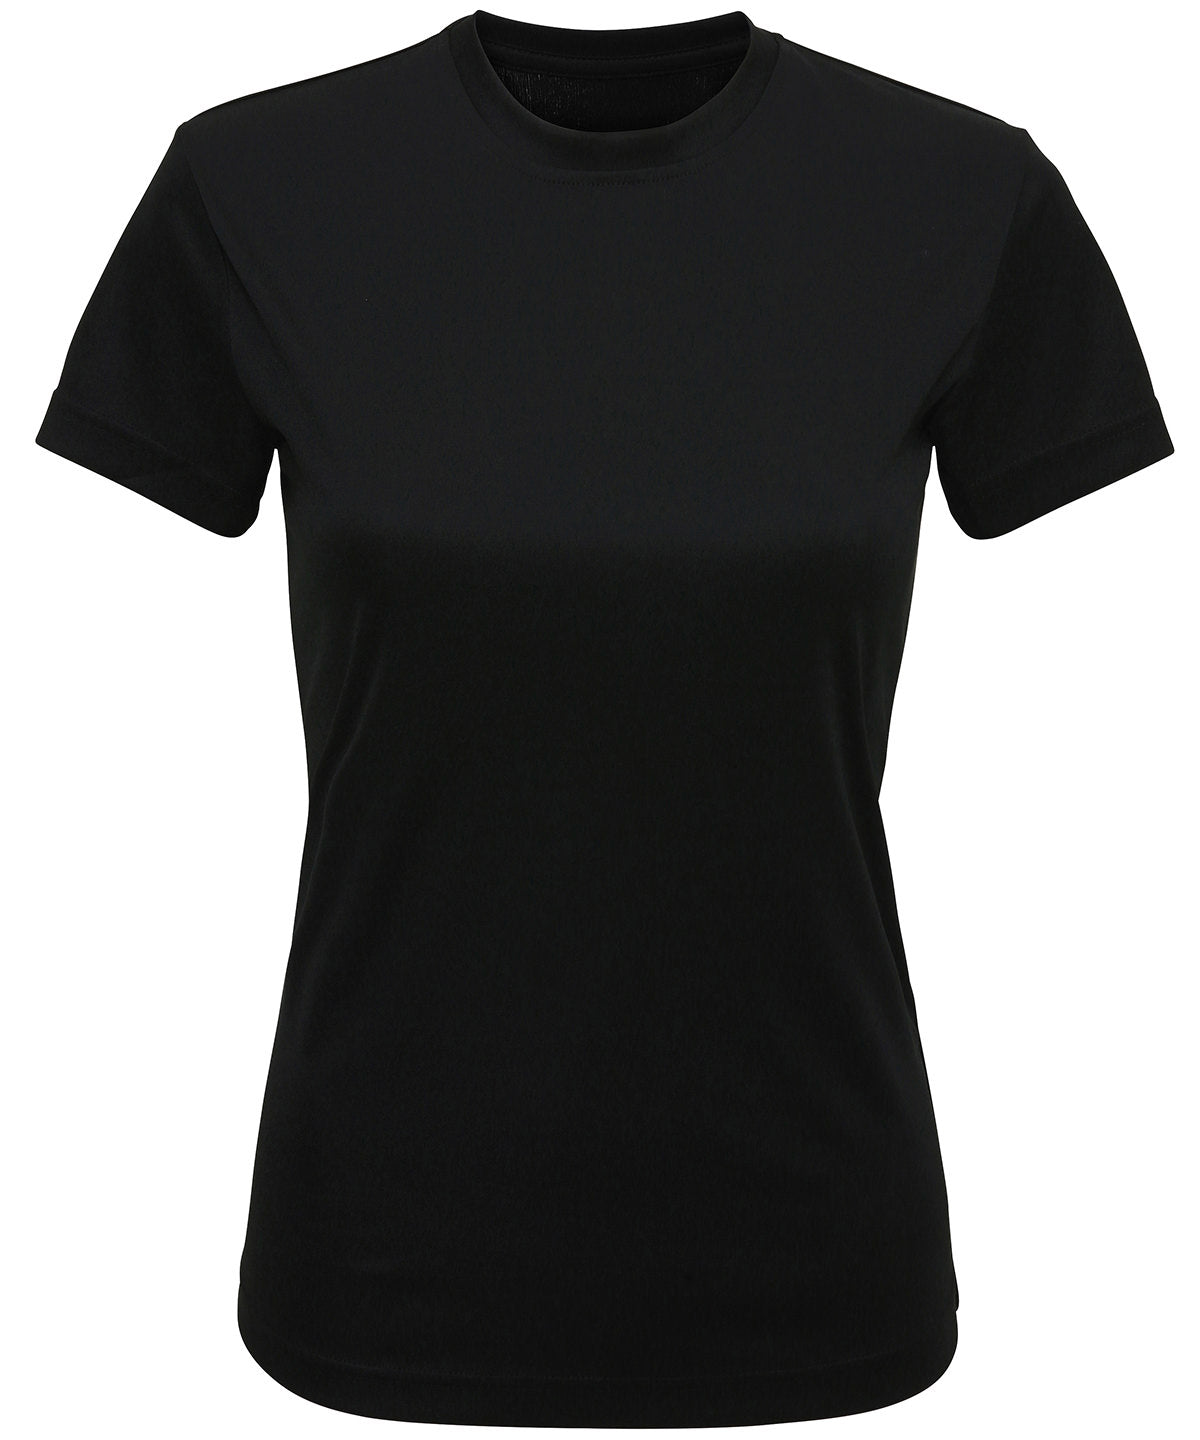 Women's TriDri® recycled performance t-shirt